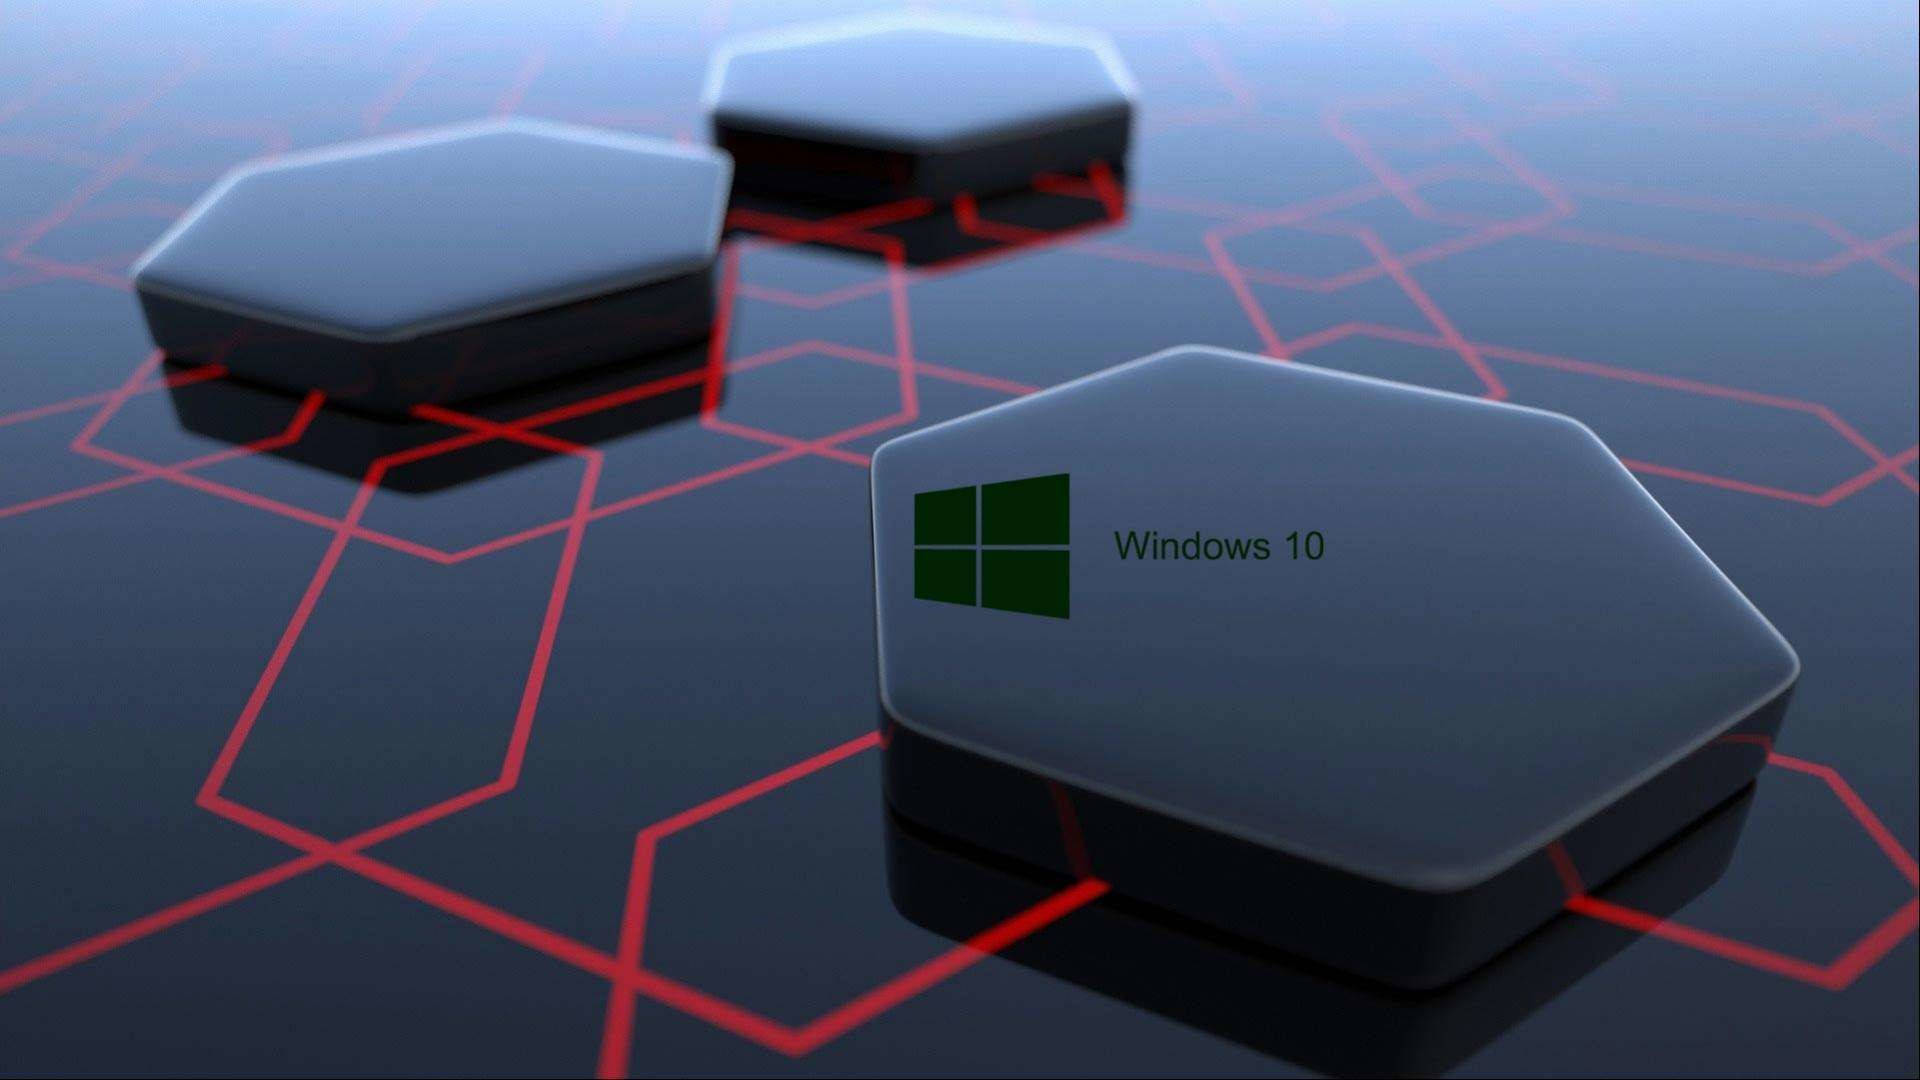 Black Windows 10 Hd Futuristic Shapes Background